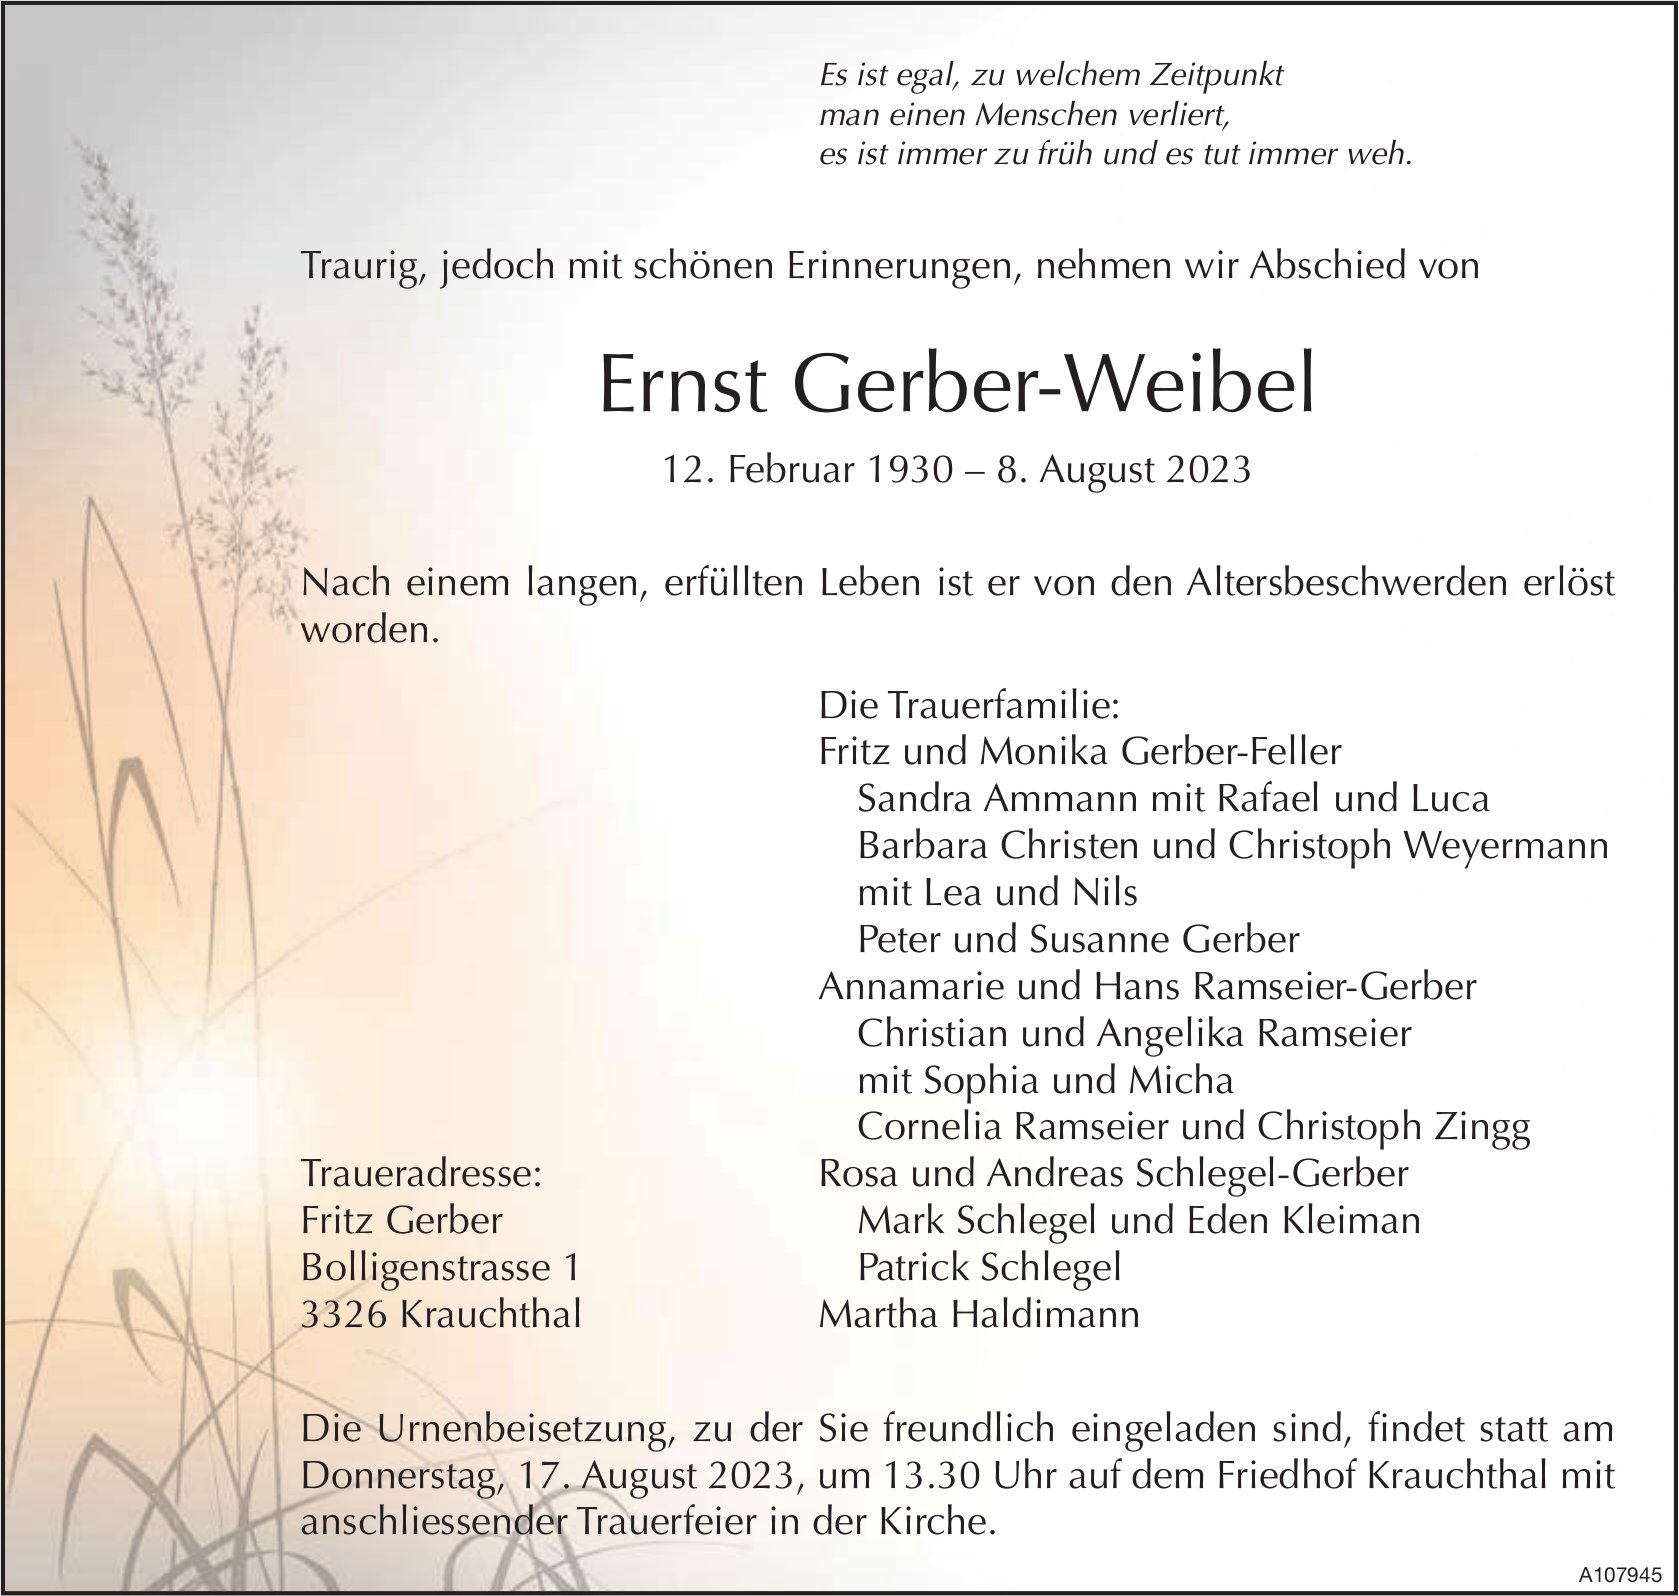 Ernst Gerber-Weibel, August 2023 / TA